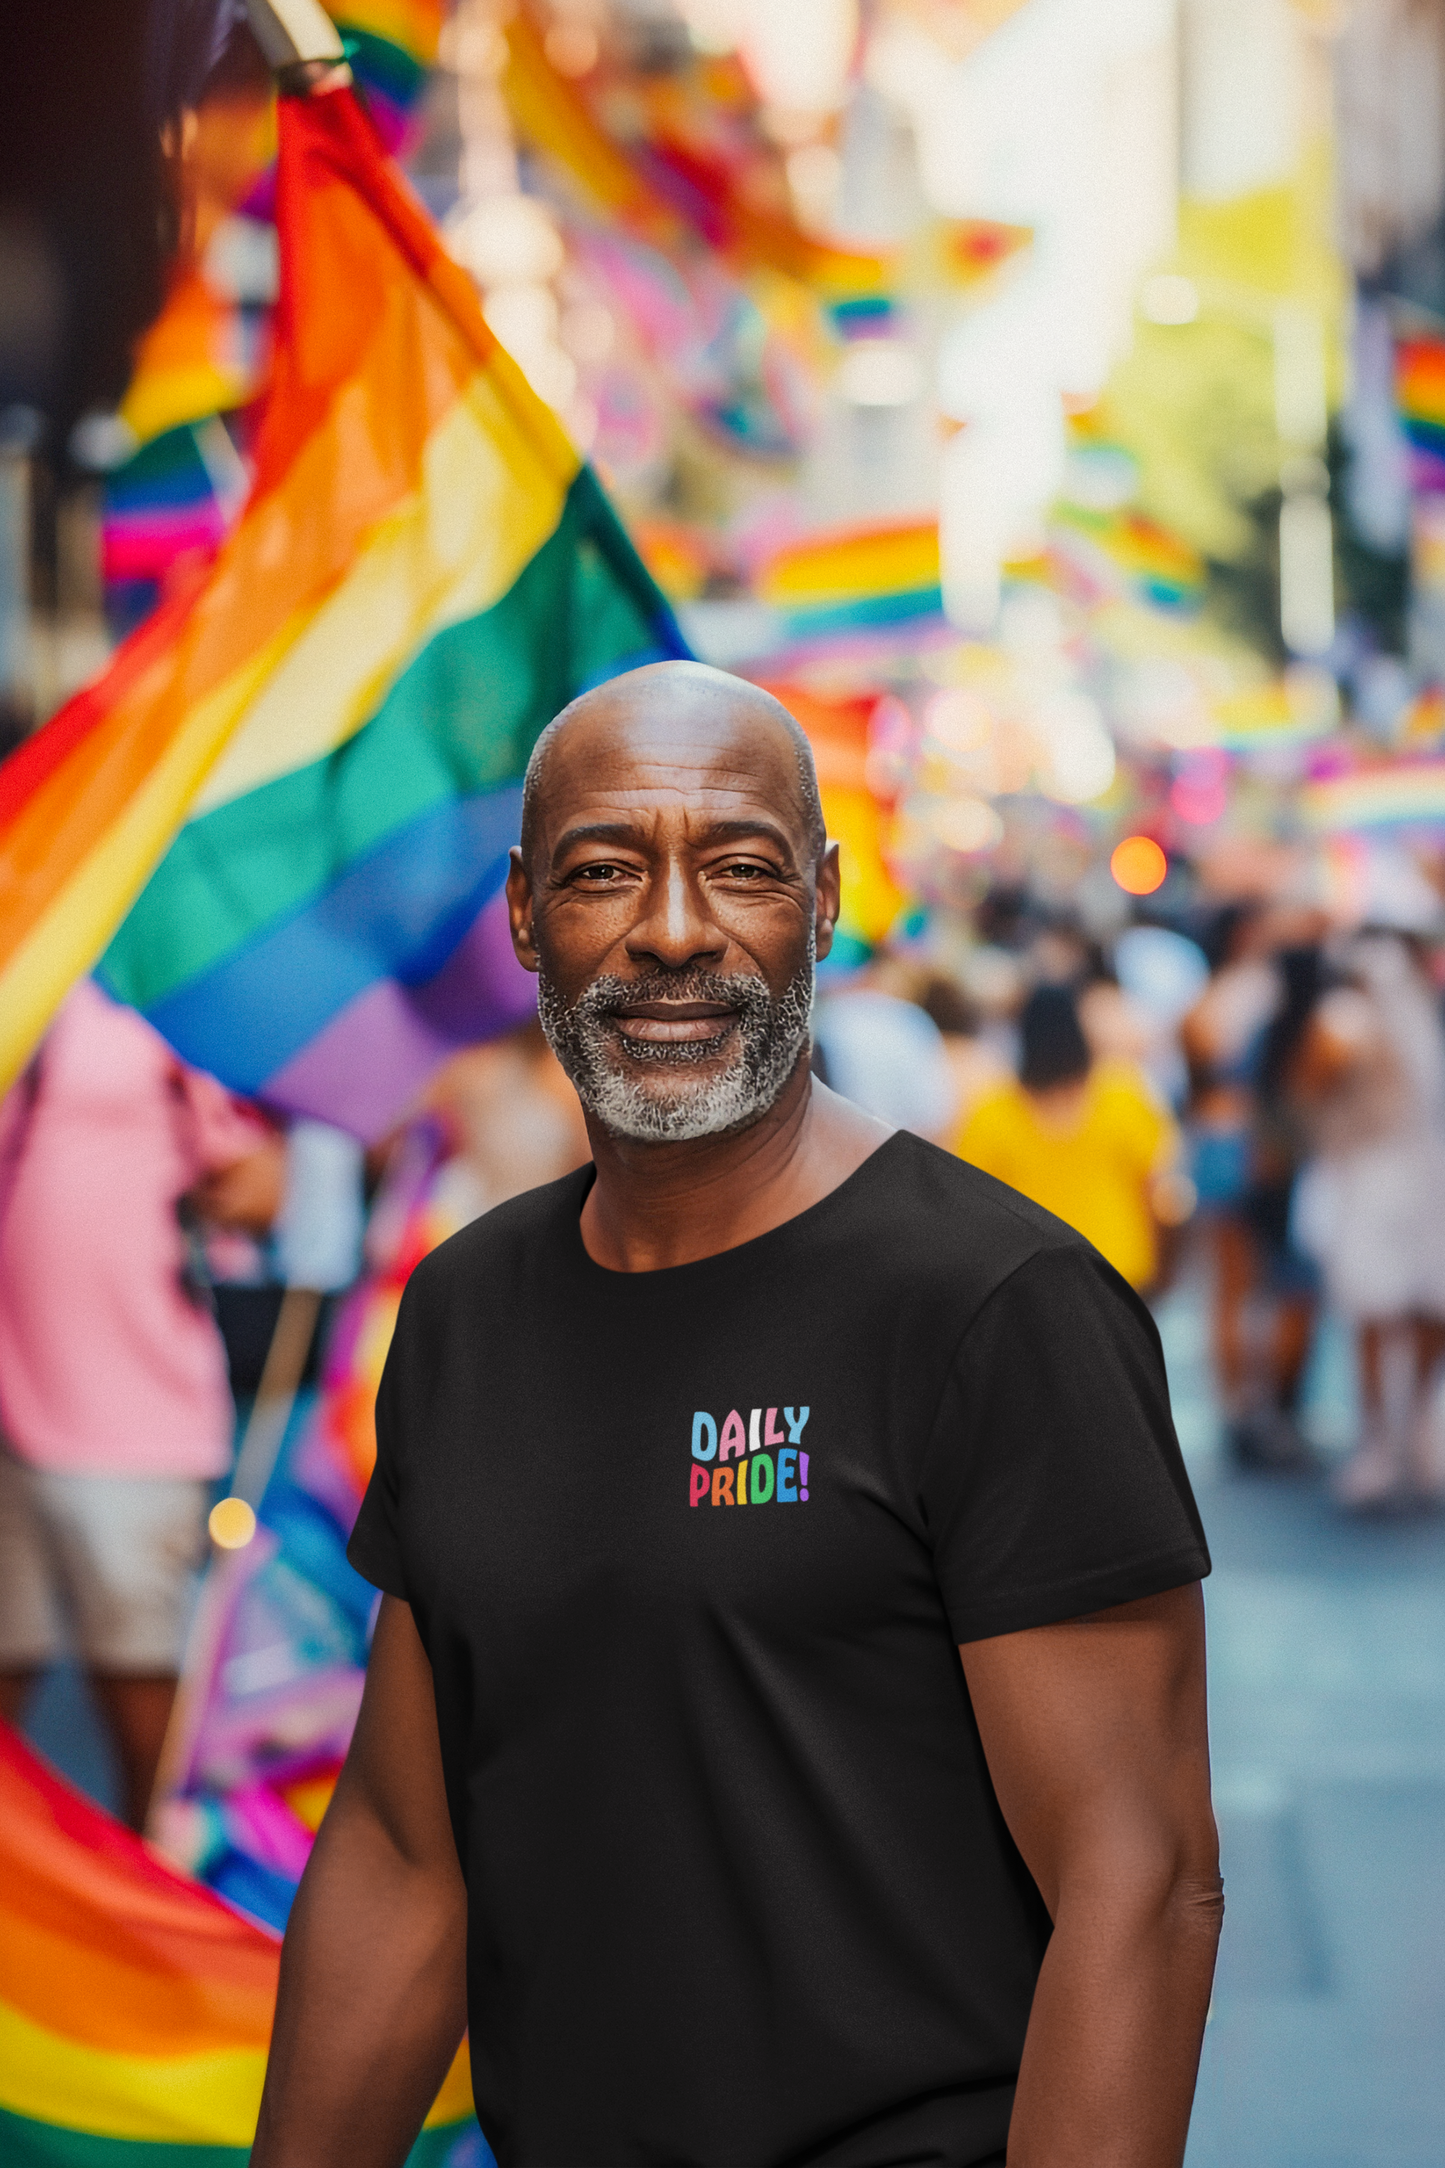 T-shirt en coton biologique : Daily Pride